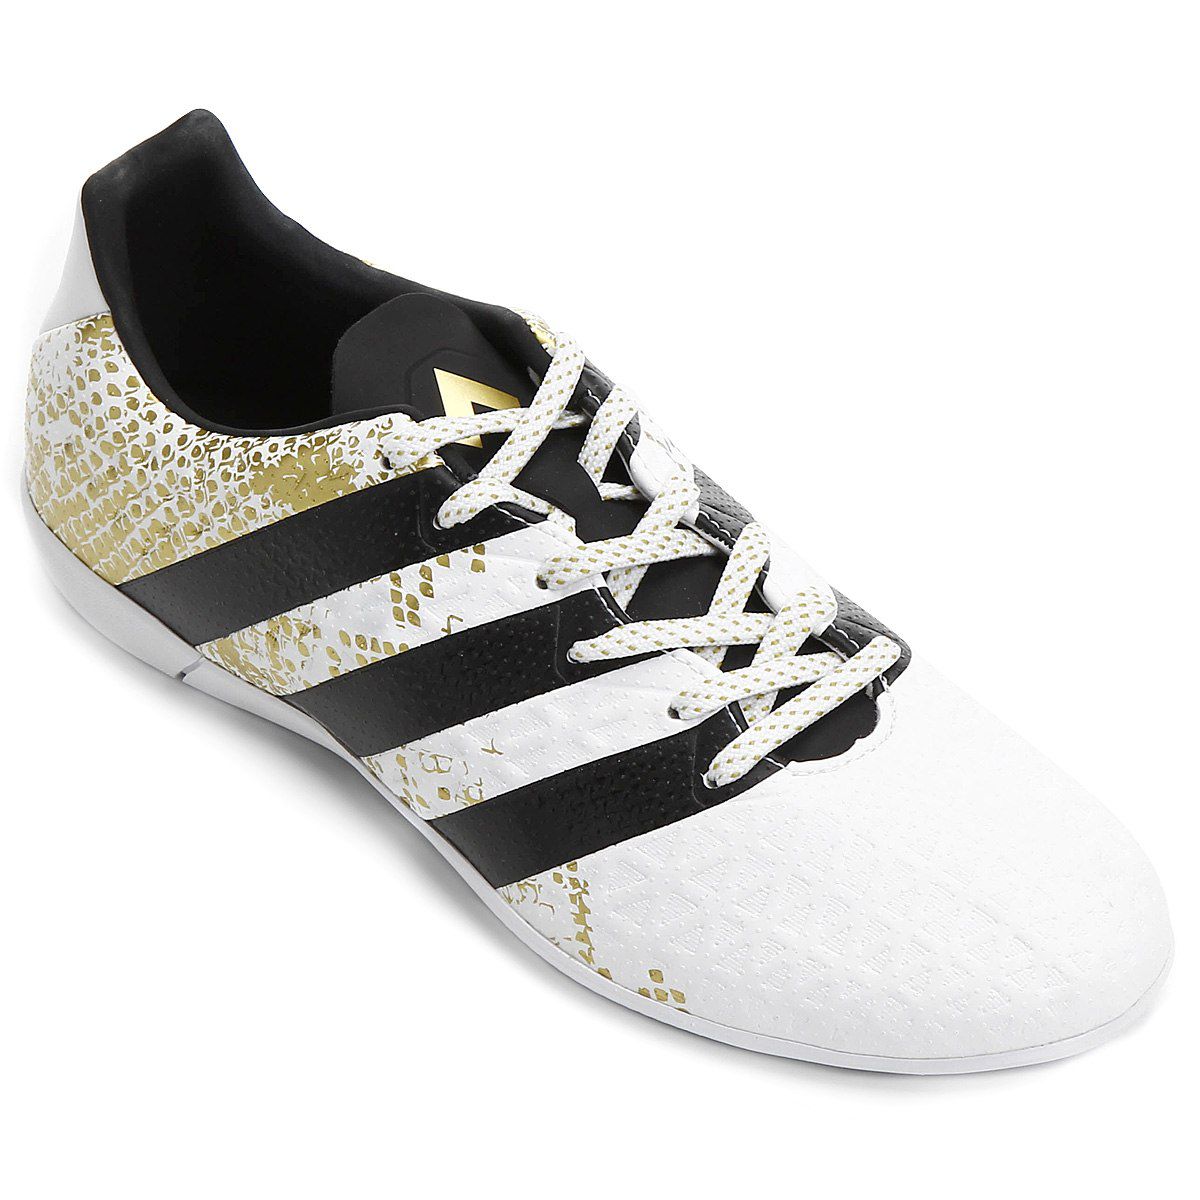 Chuteira Salão Adidas Ace 16.3 IN Branca/Dourada - 10K Sports